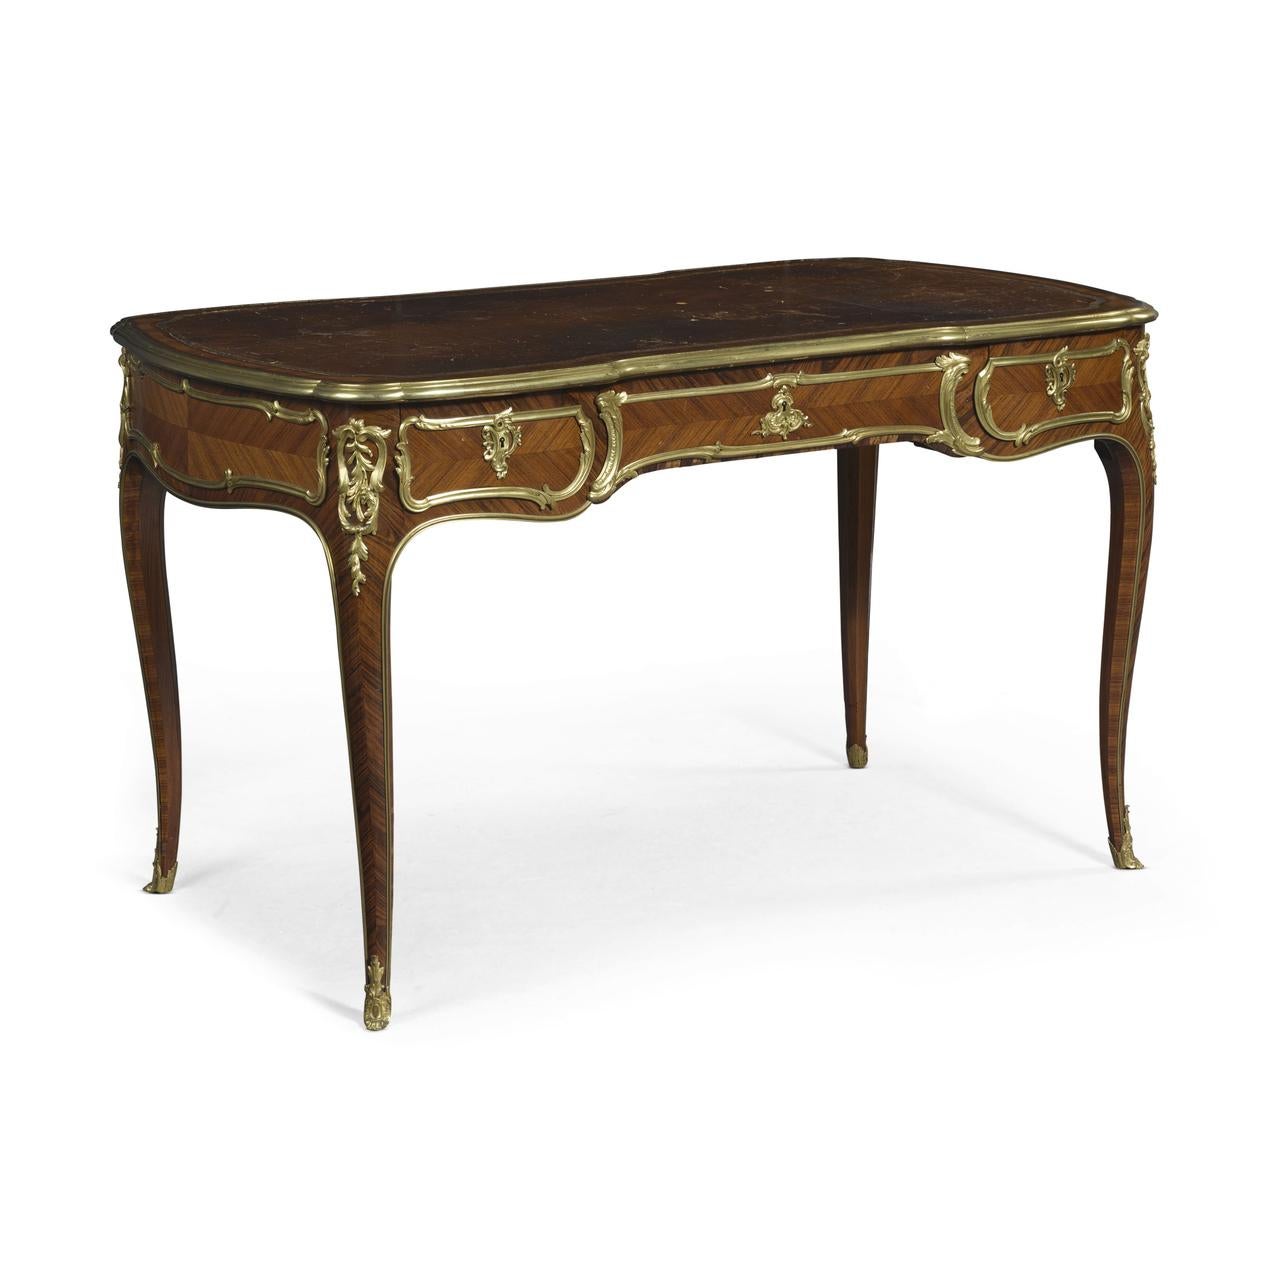 A fabulous French Louis XV style late 19th century gilt bronze mounted tulipwood and kingwood bureau plat - desk